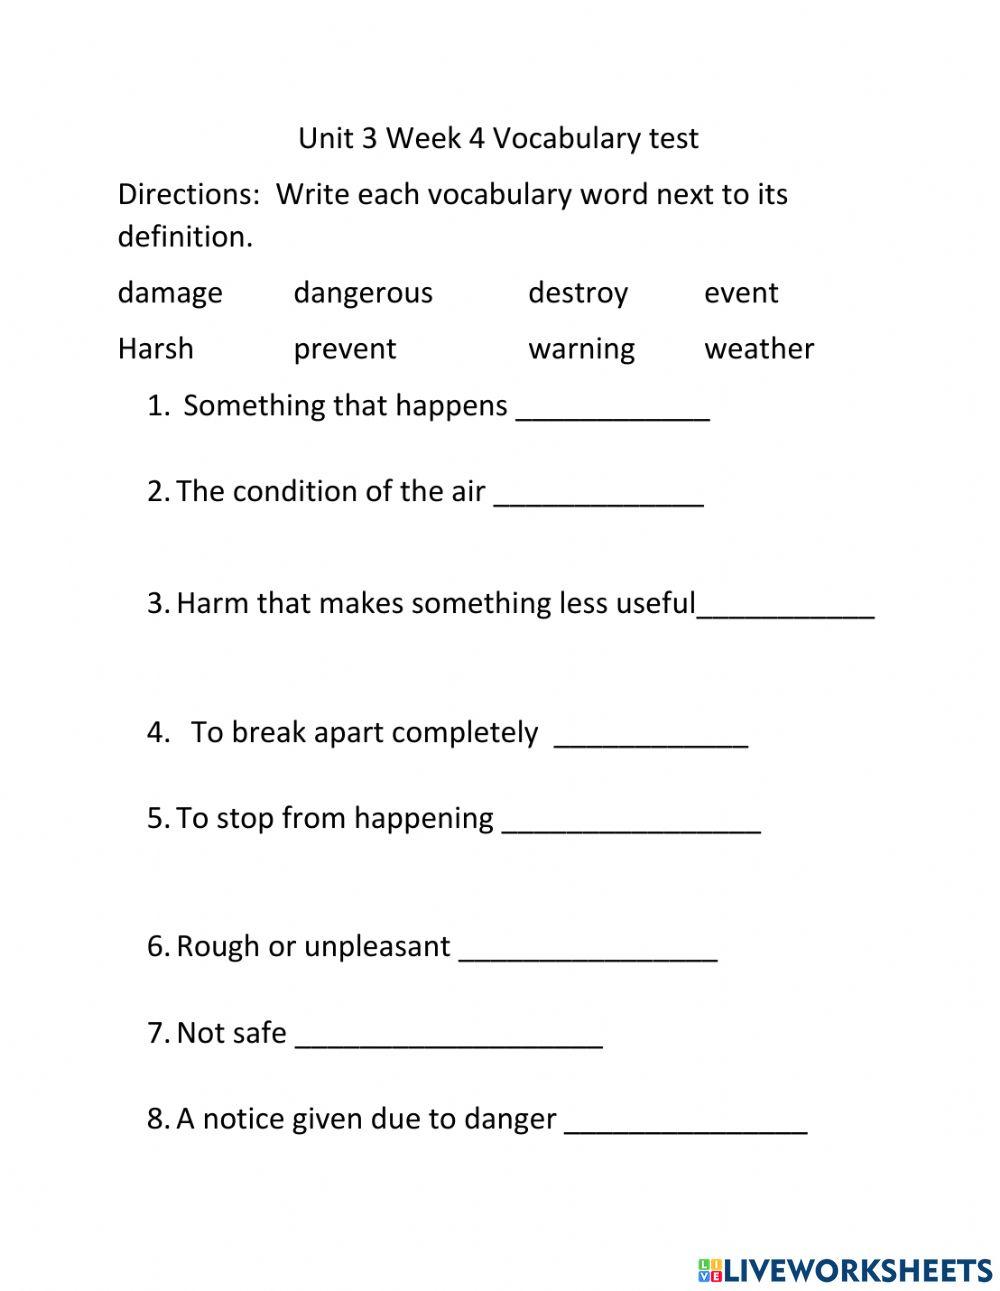 Unit 3 week 4 Vocabulary Test - Reading Wonders Grade 2